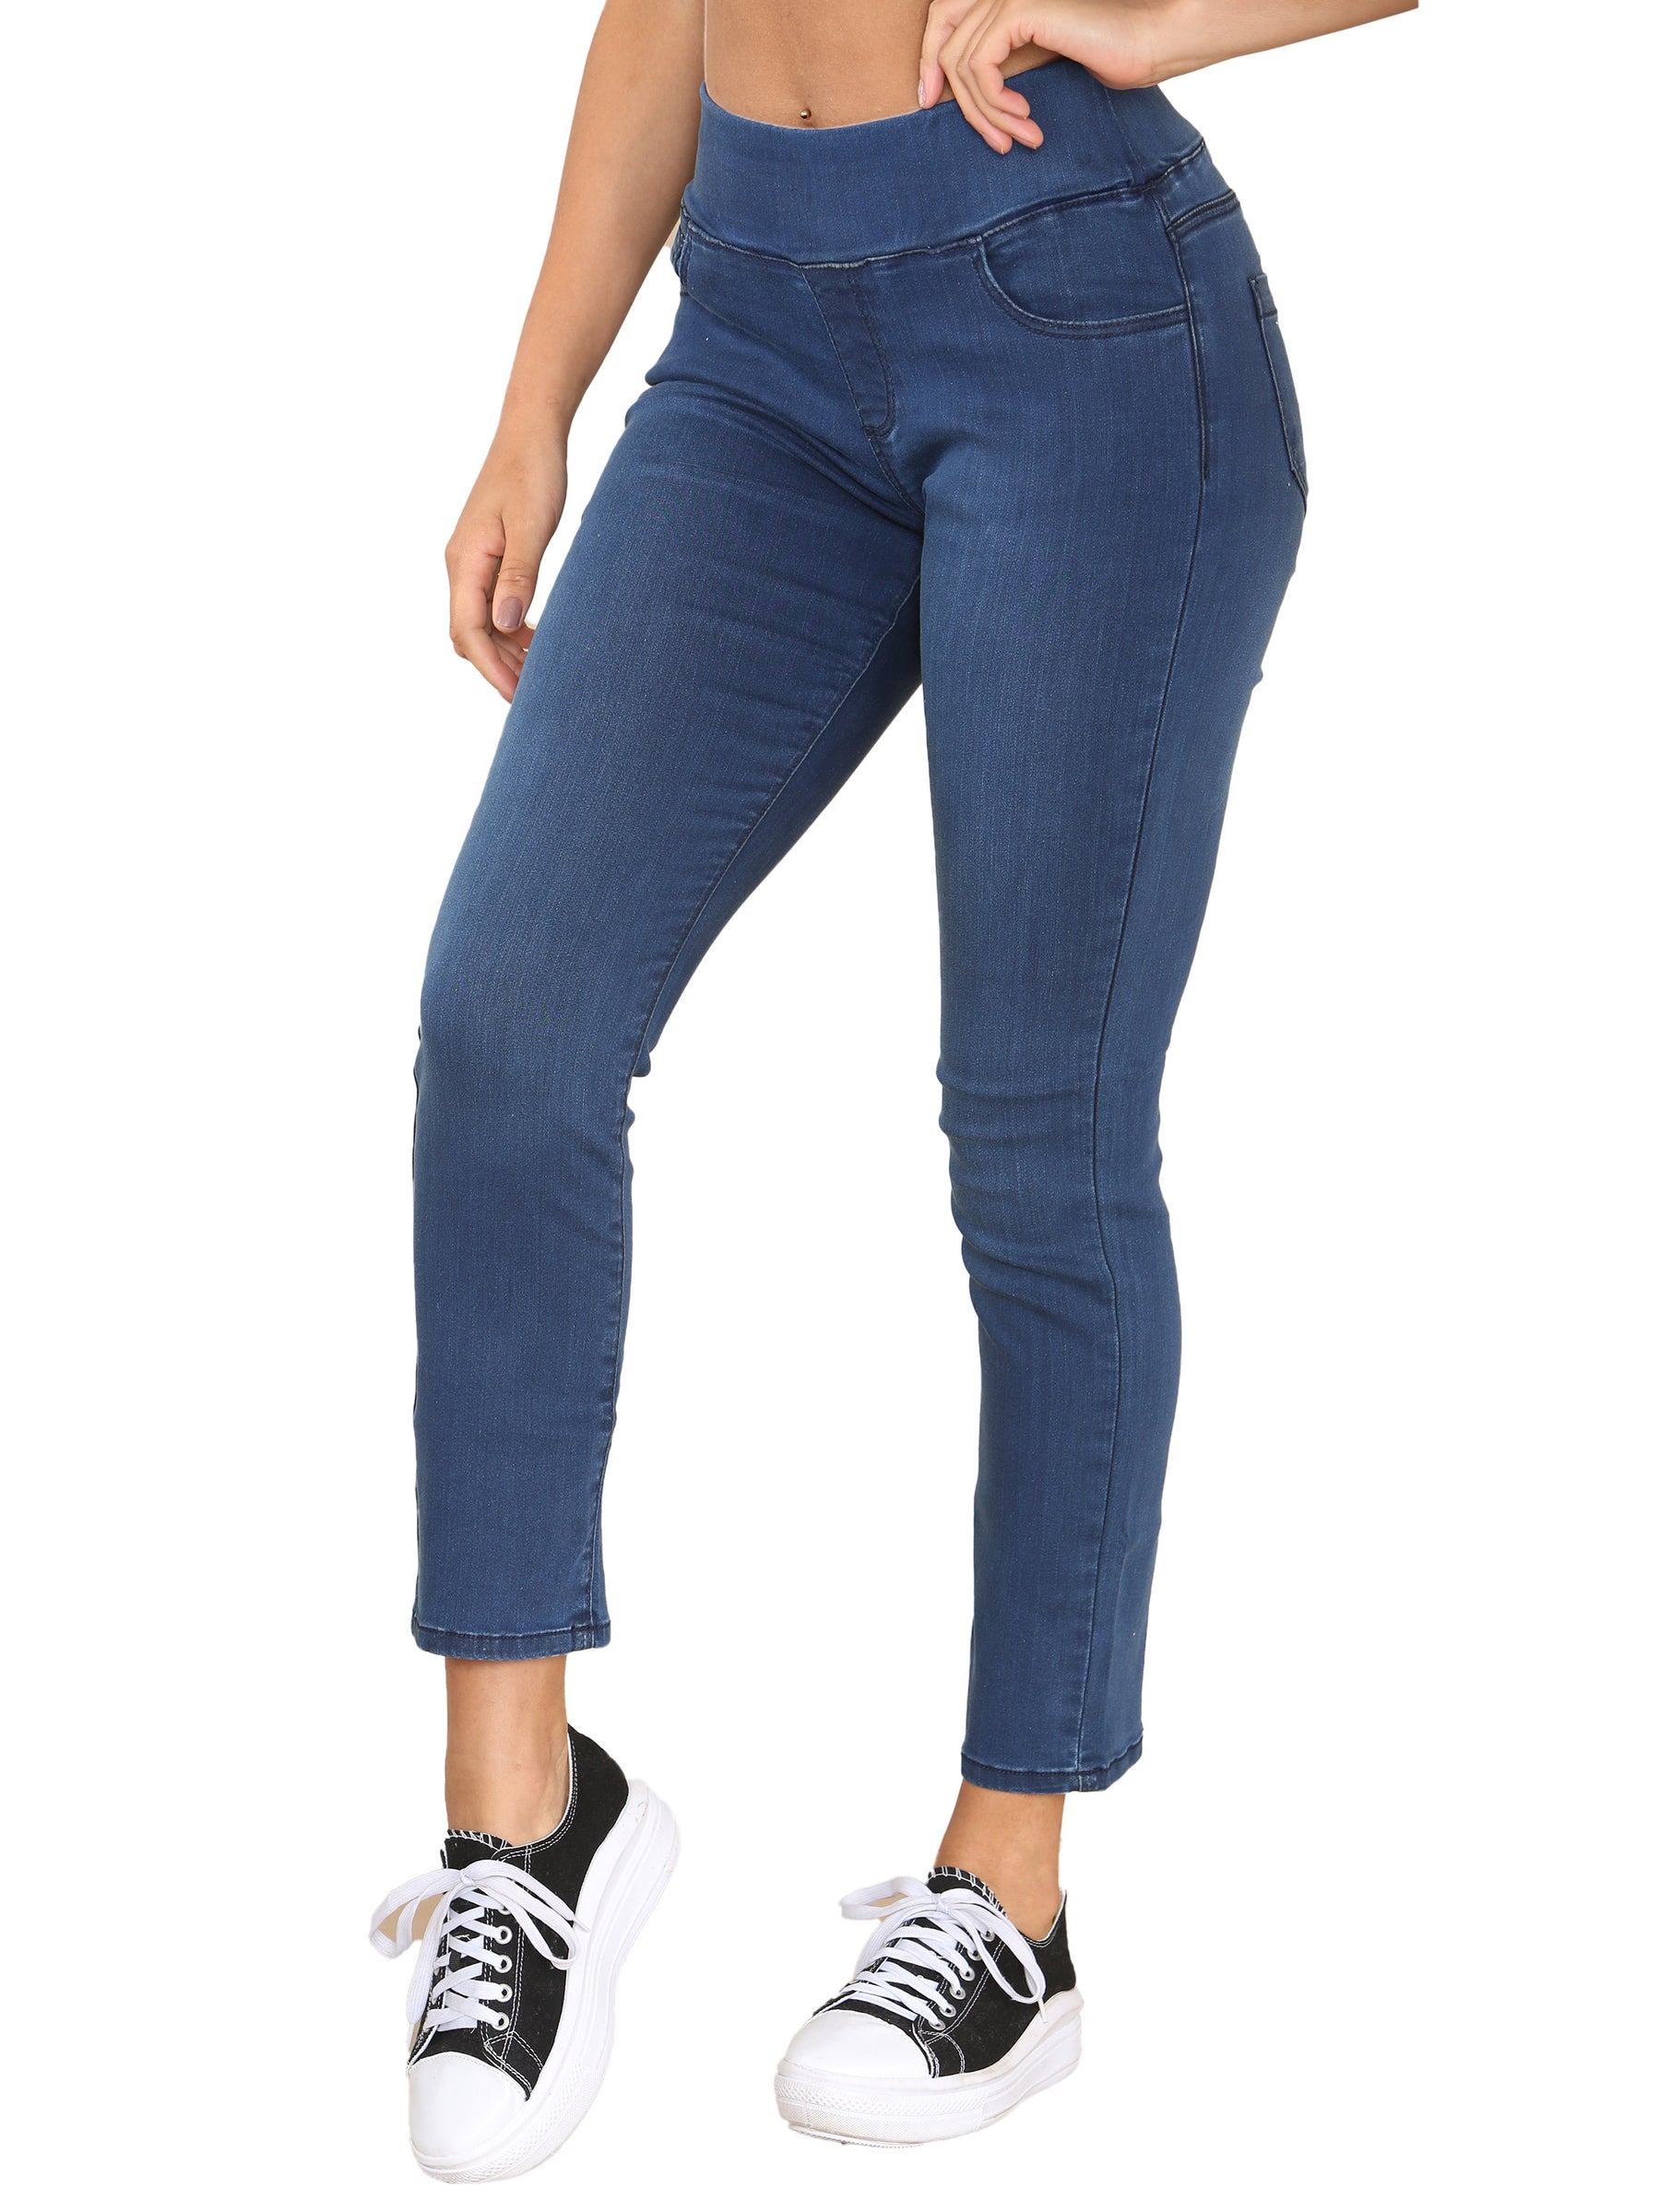 EZL432 Enzo Womens Wide Leg Denim Jeans Mid Rise Elasticated Waist Cotton Stretch Pants RAWDENIM RAWDENIM